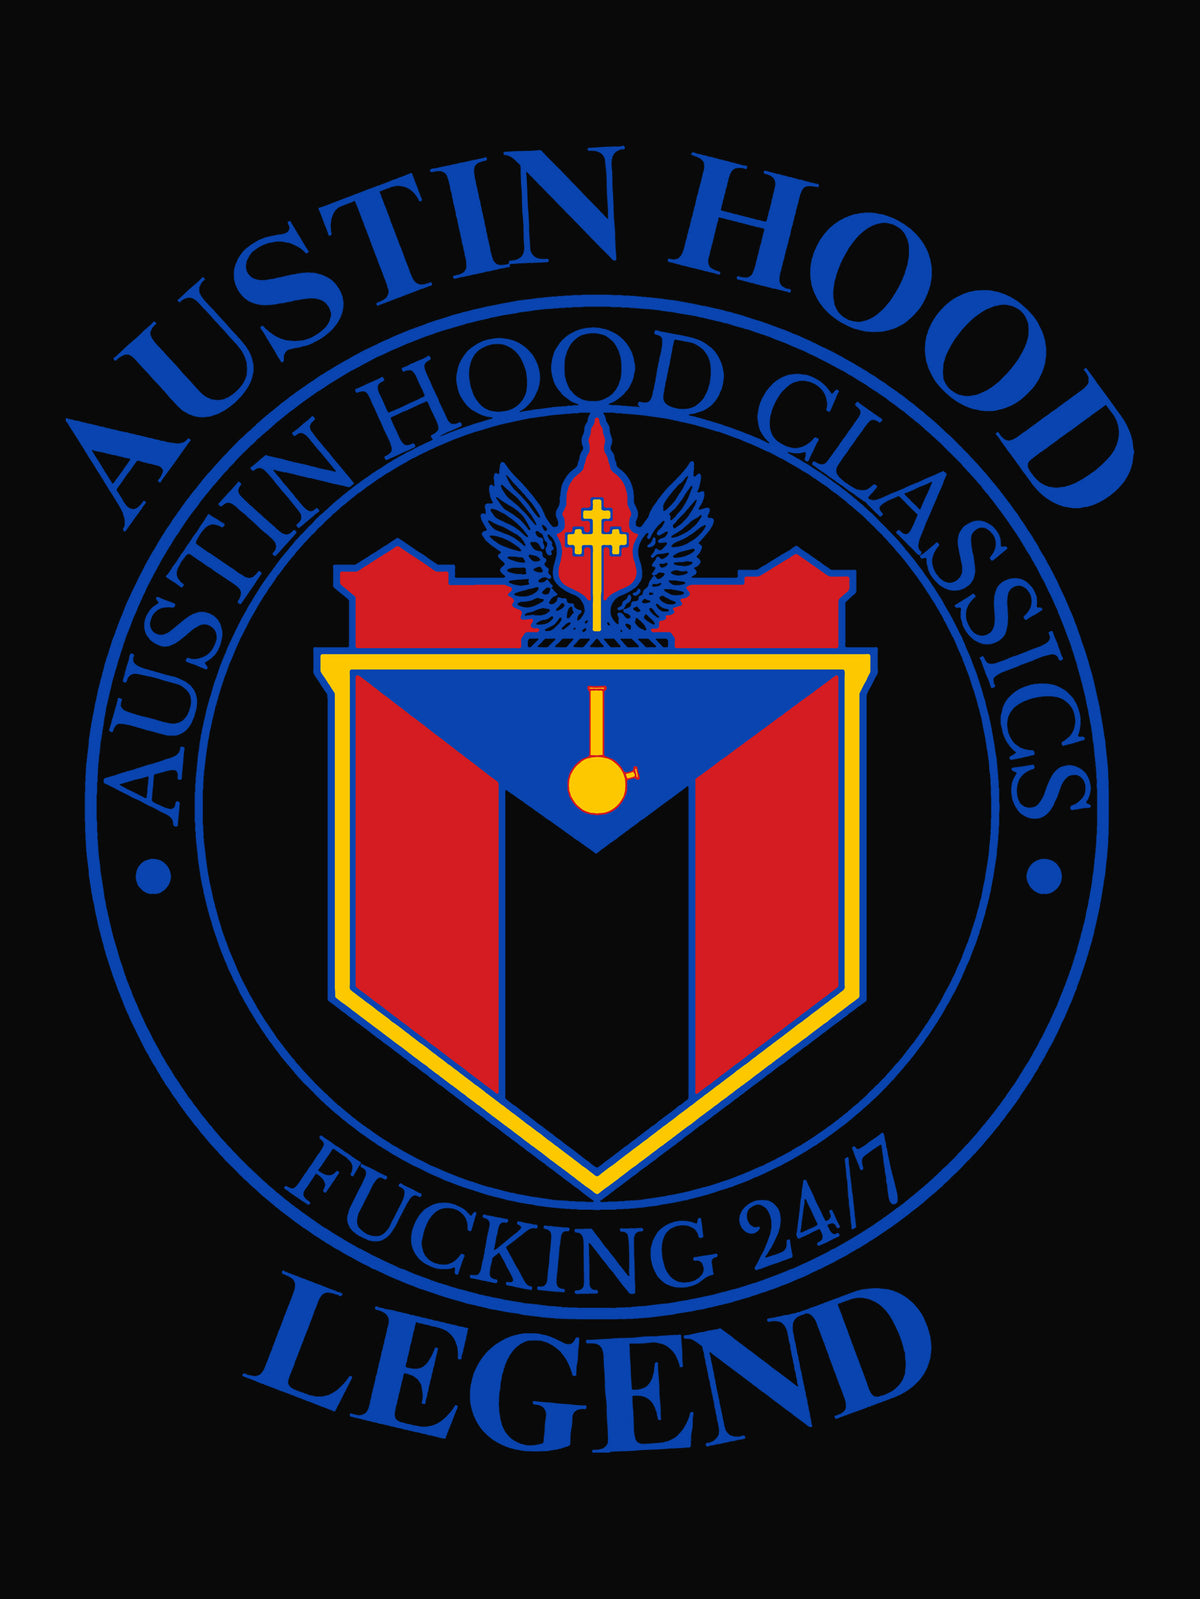 Austin Hood Legend Logo Shirt by Austin Hood Classics